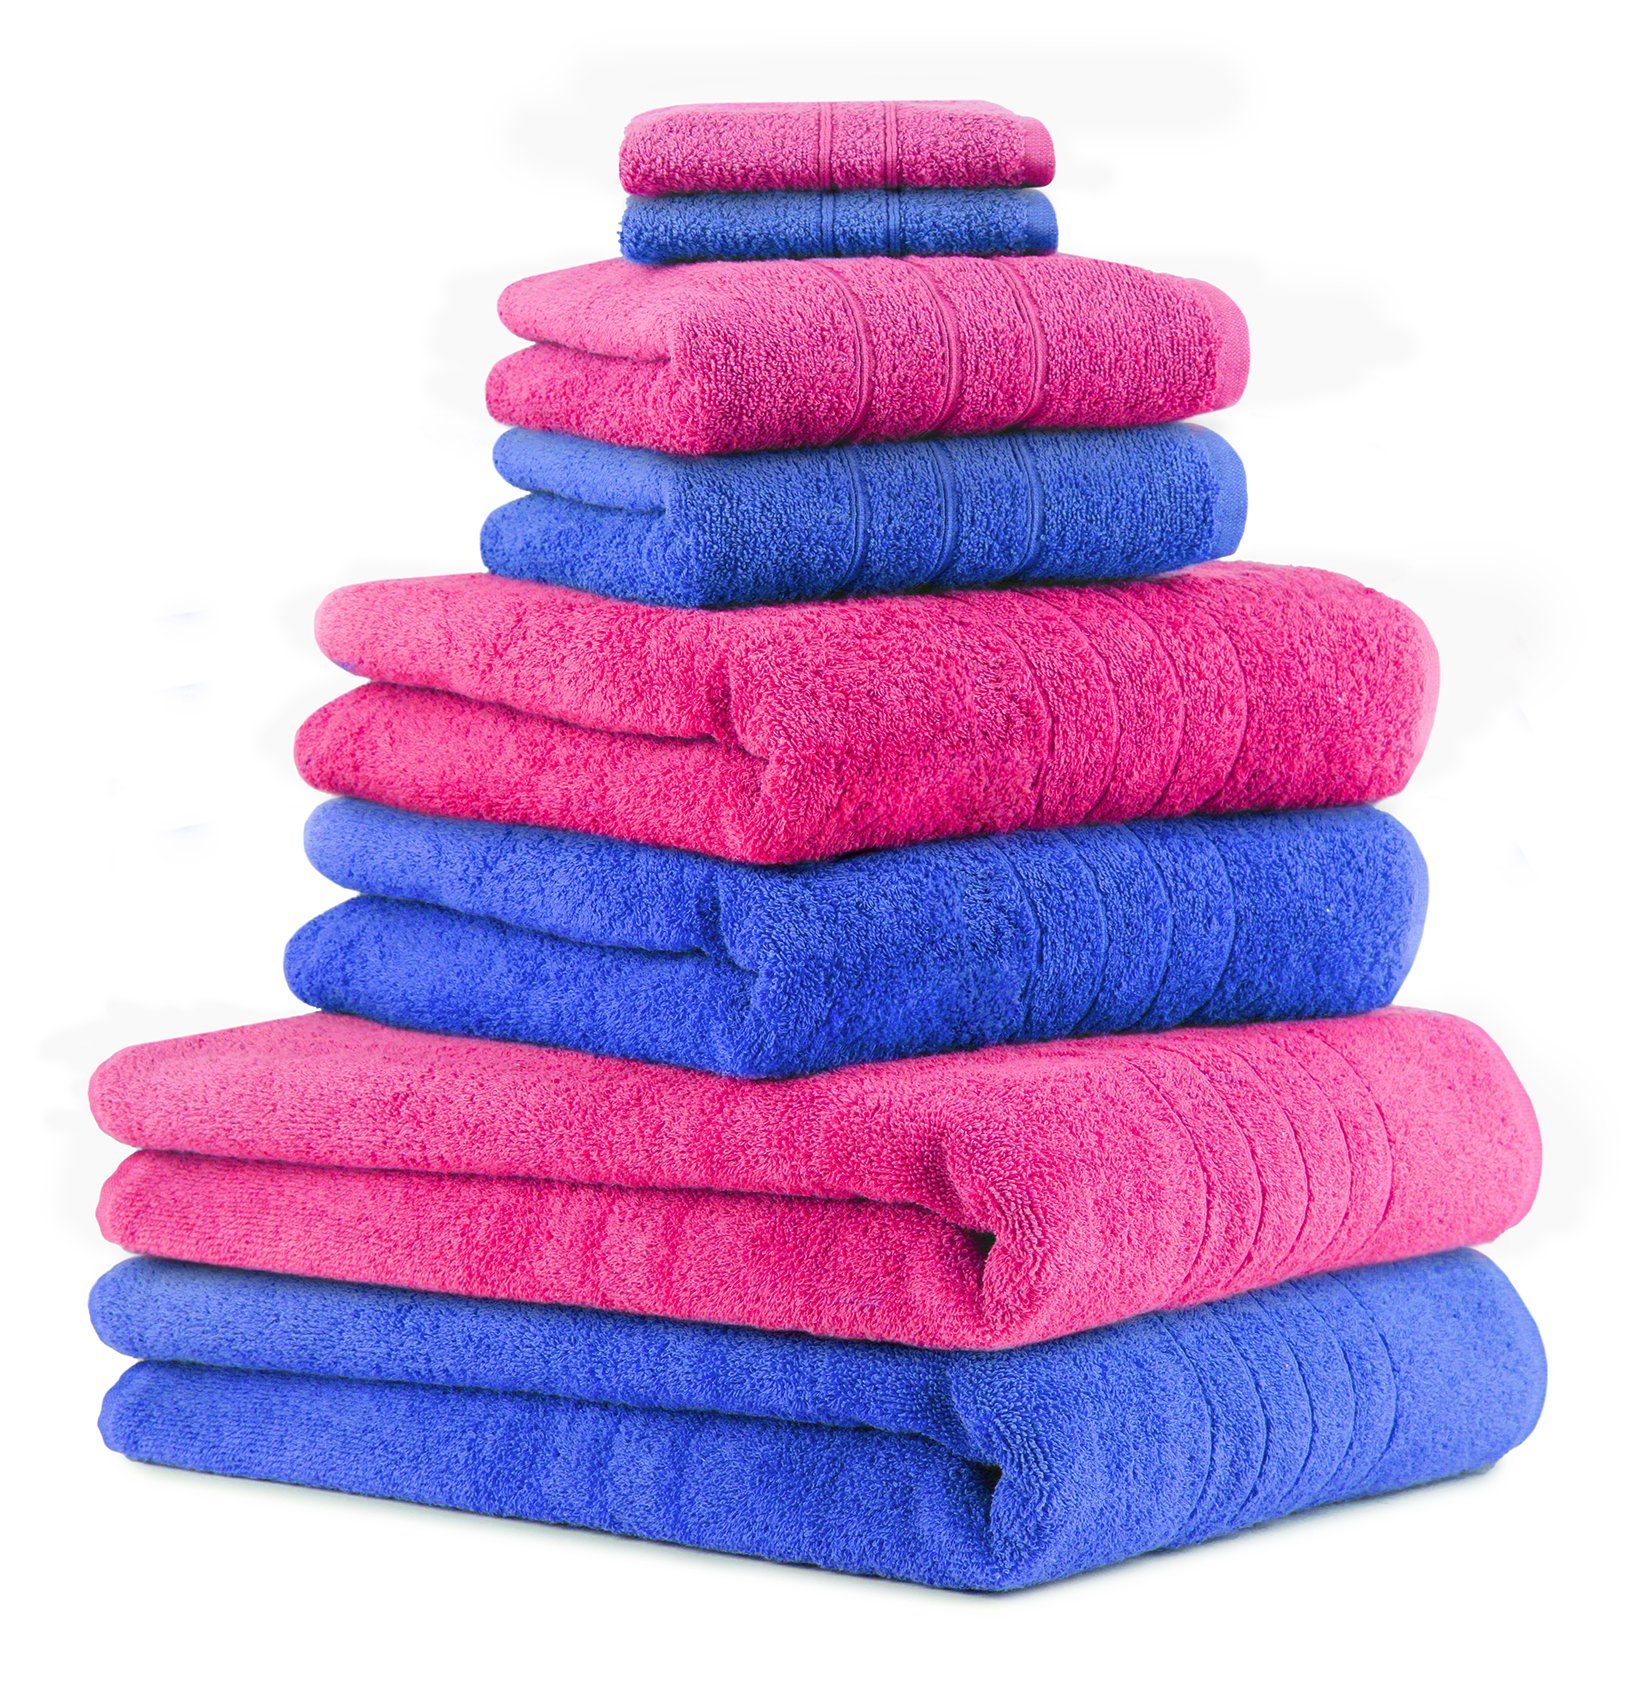 2 (8-tlg) 100% 100% Deluxe Handtuch Seiftücher 2 2 Handtücher Badetücher Baumwolle, blau, Fuchsia und 8-TLG. Baumwolle Betz Farbe Handtuch-Set Duschtücher Set 2